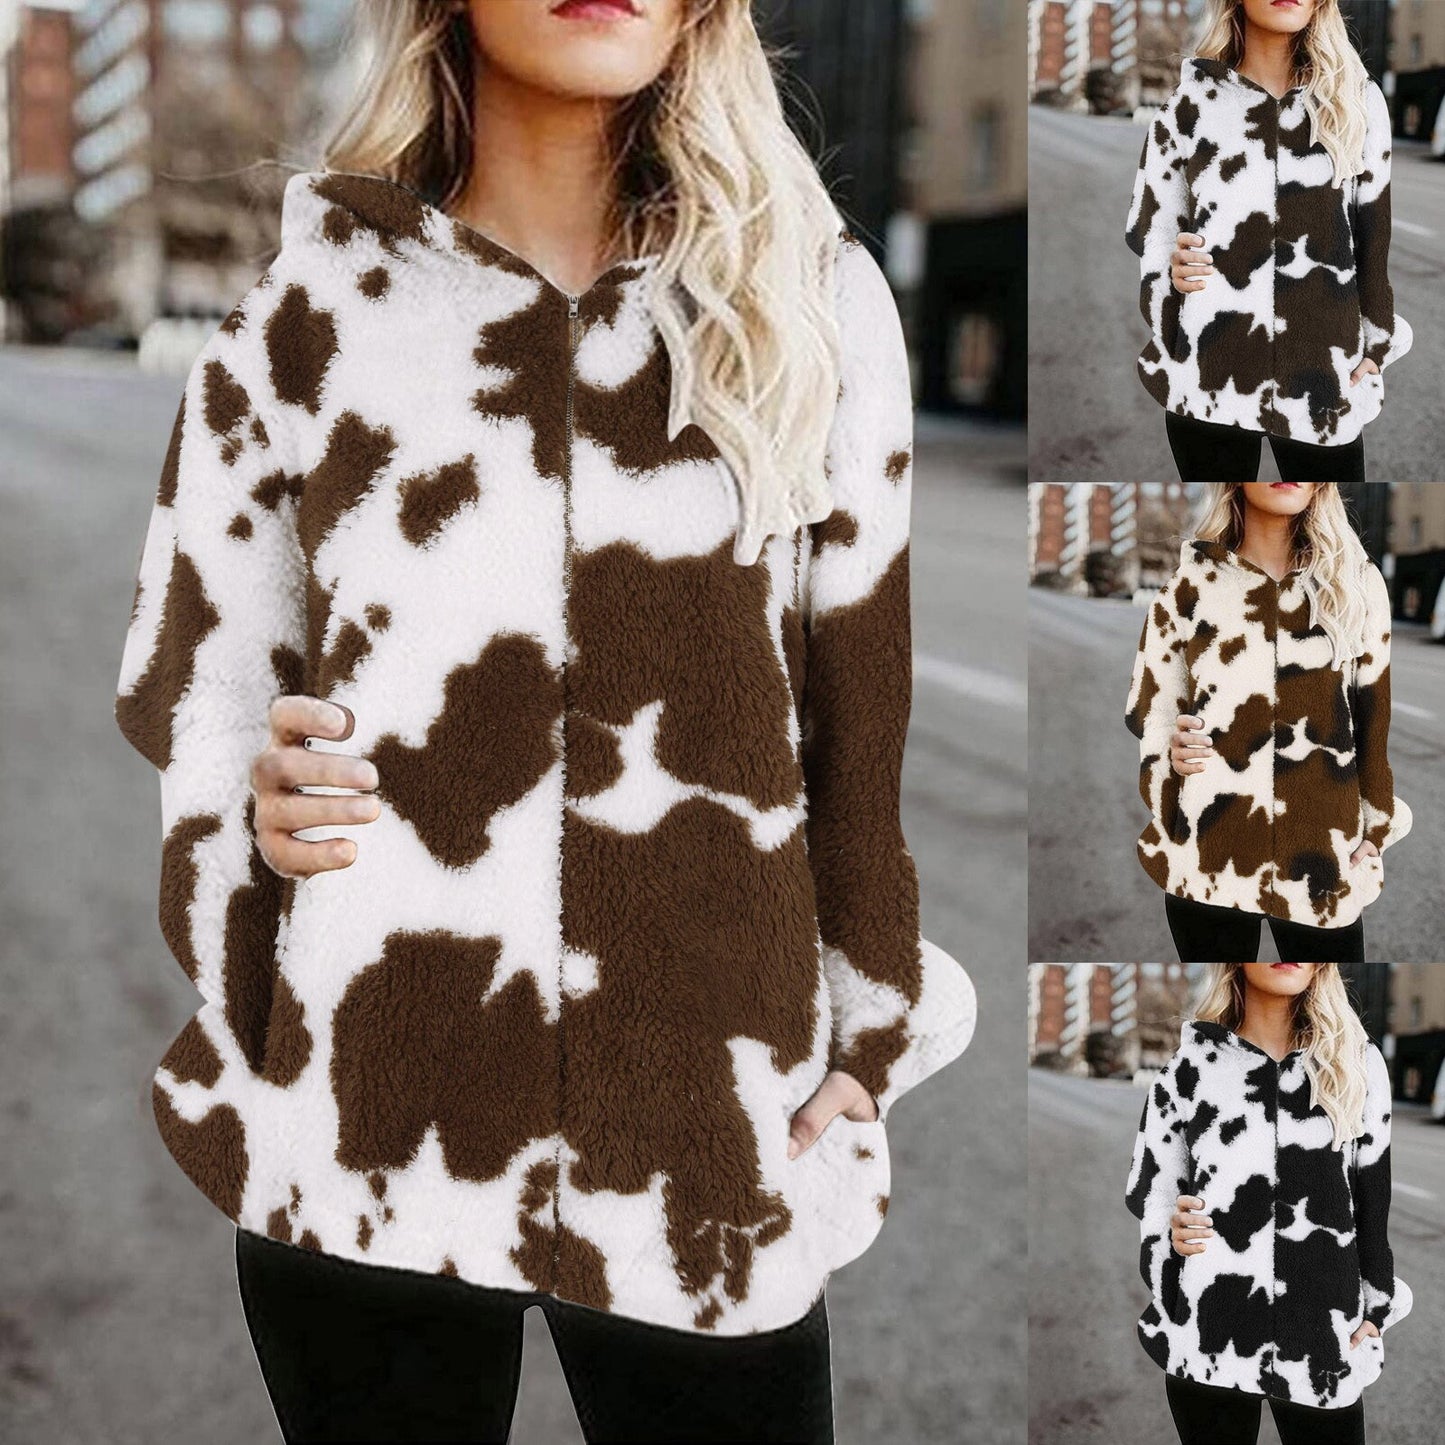 Cow Printing Women 2021 Winter Jackets Zipper Long-sleeved Sweatshirts Streetwear Cashmere Warmth Thick Coat Loose Hoodies